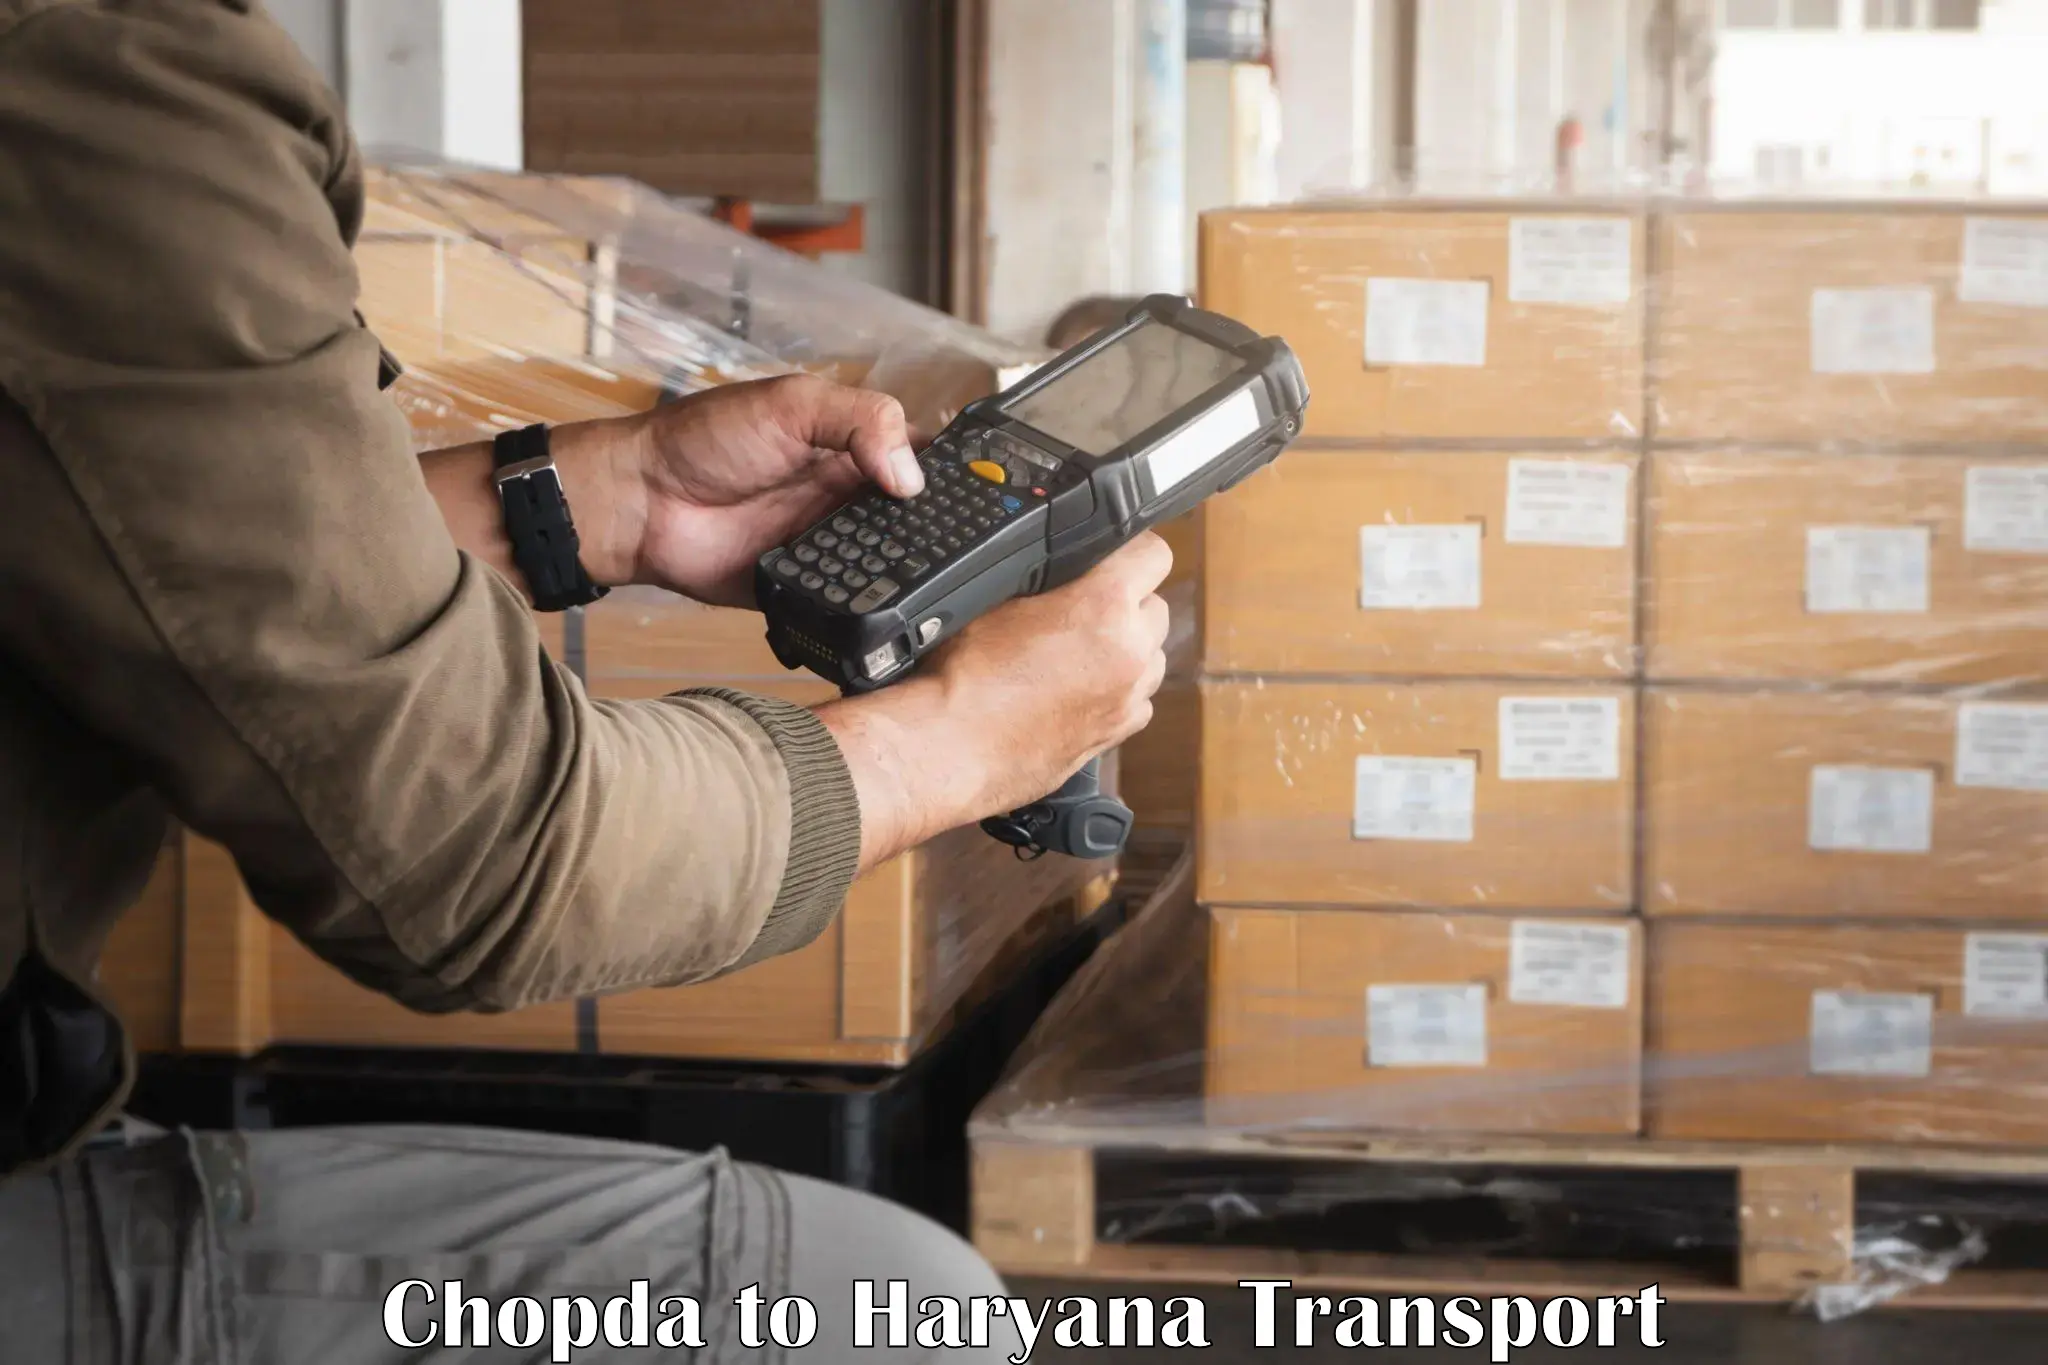 Goods transport services Chopda to Gurgaon